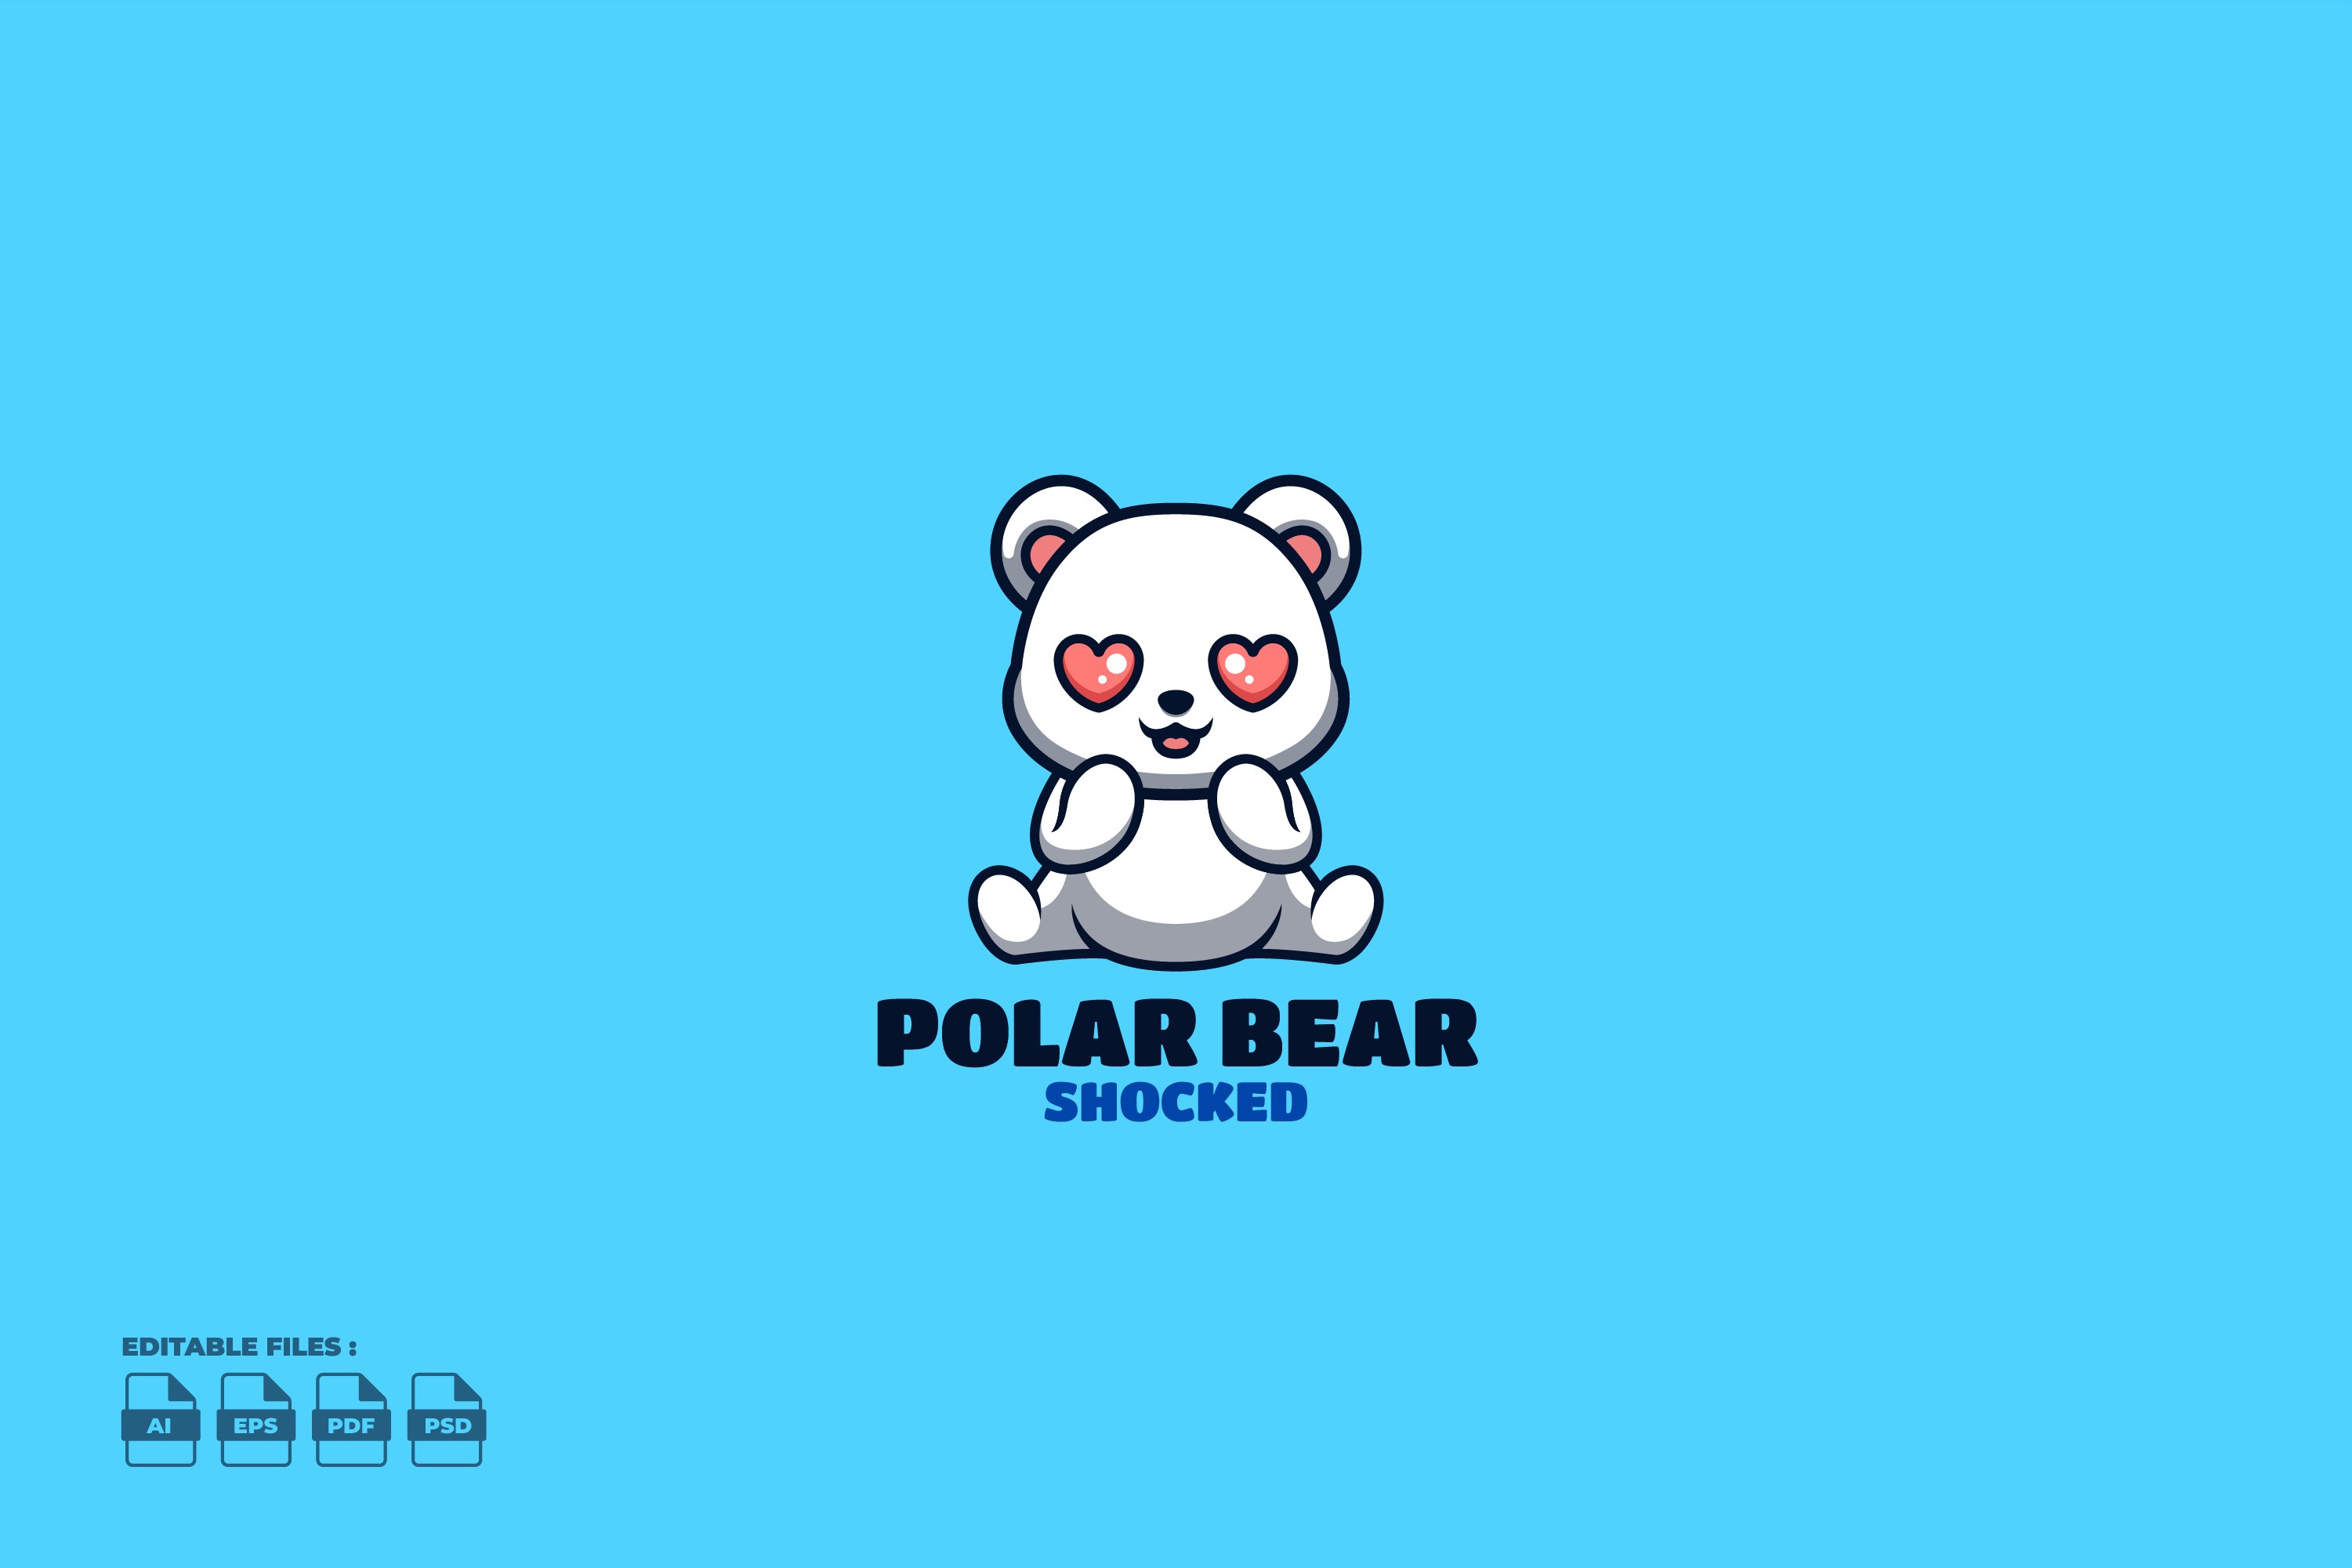 Shocked Polar Bear Cute Mascot Logo cover image.